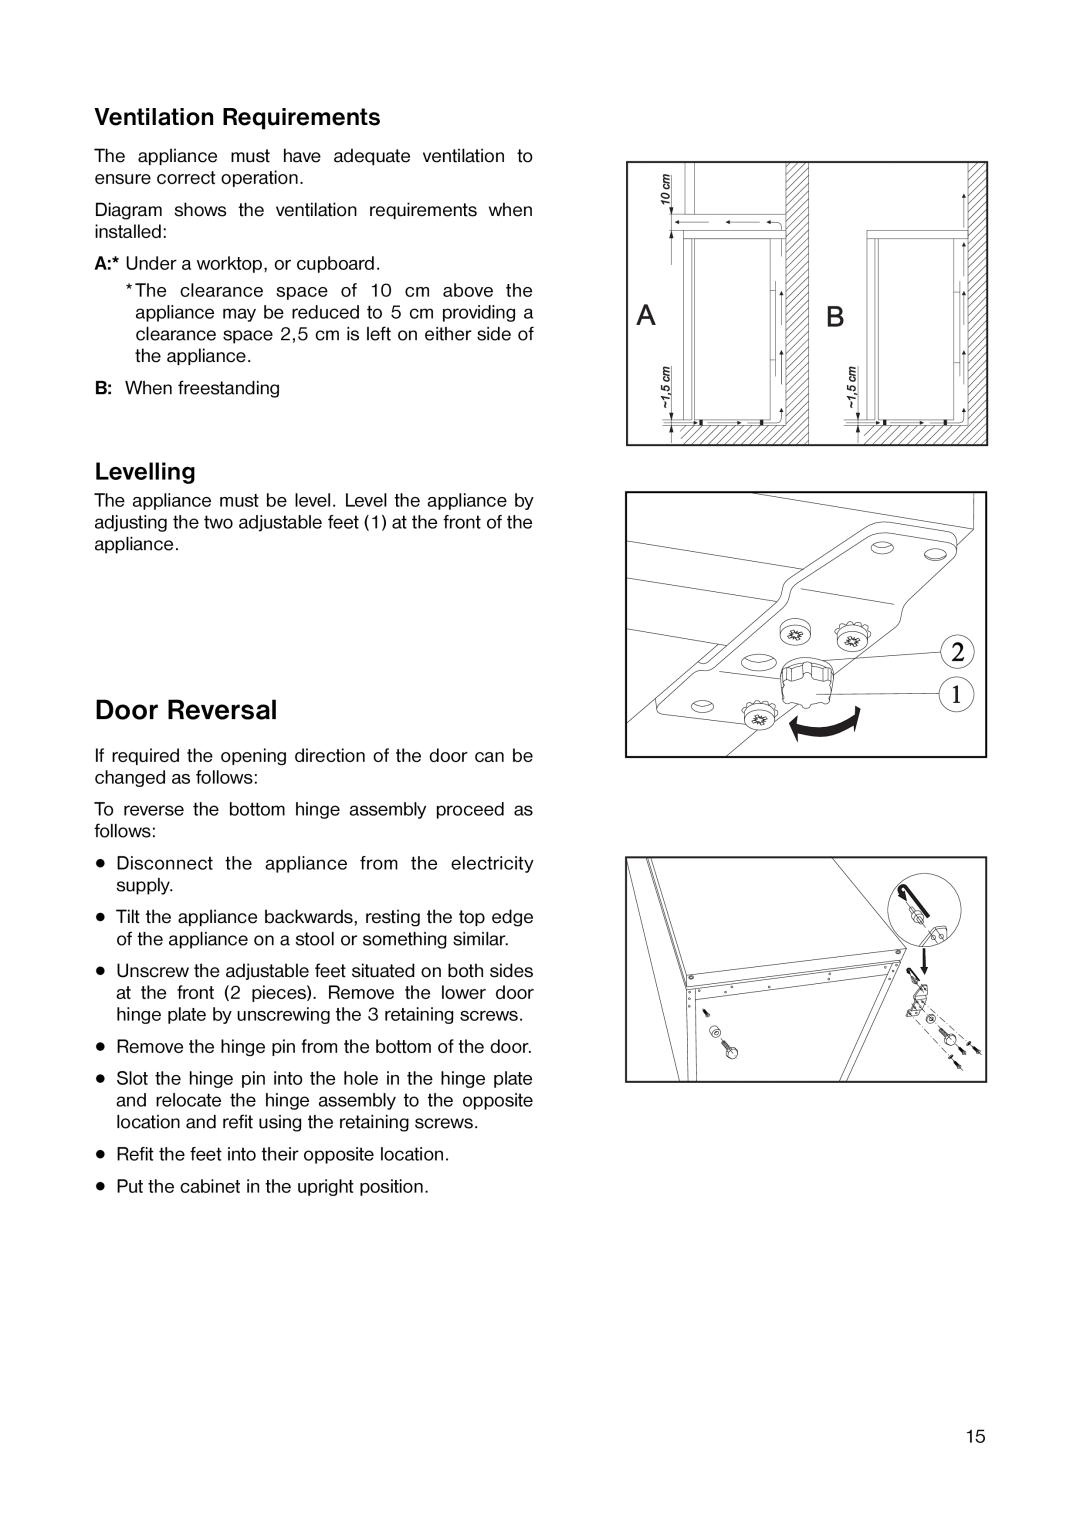 Tricity Bendix TB 58 R installation instructions Door Reversal, Ventilation Requirements, Levelling 